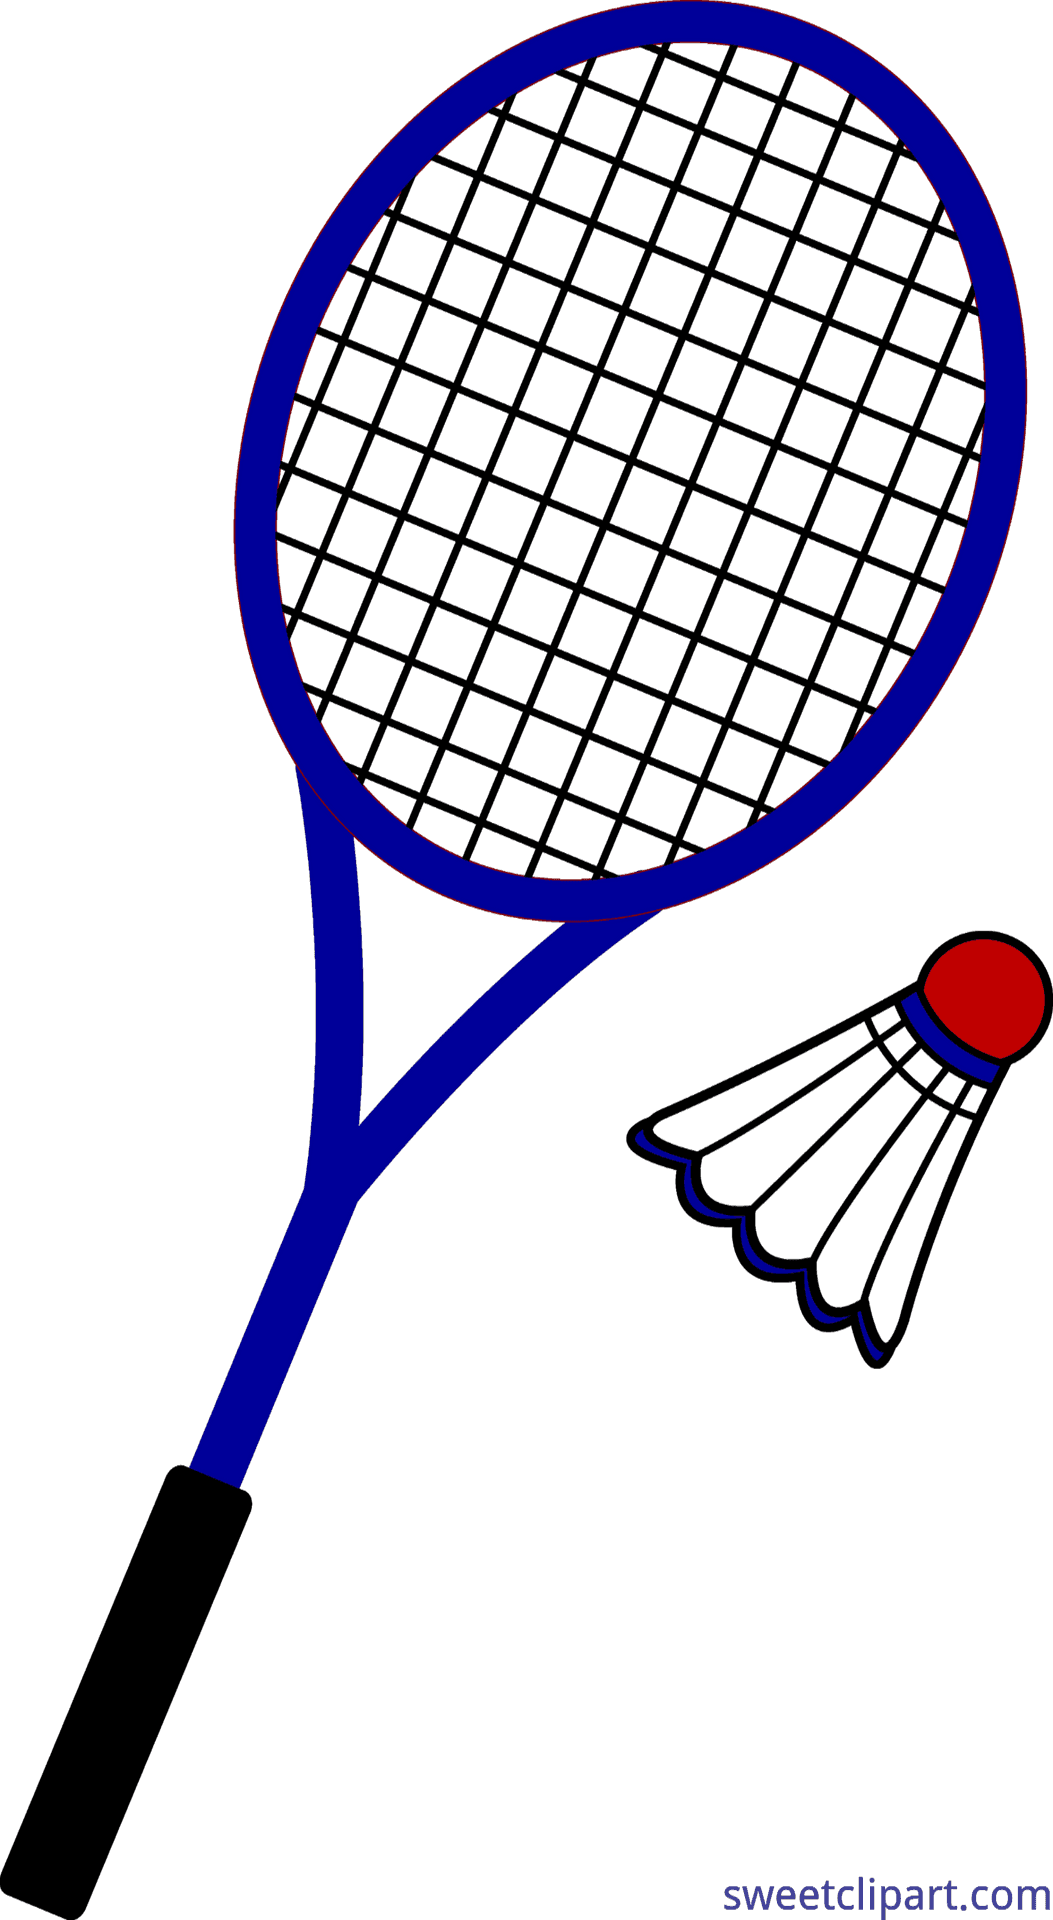 Badminton Racketand Shuttlecock Illustration PNG image